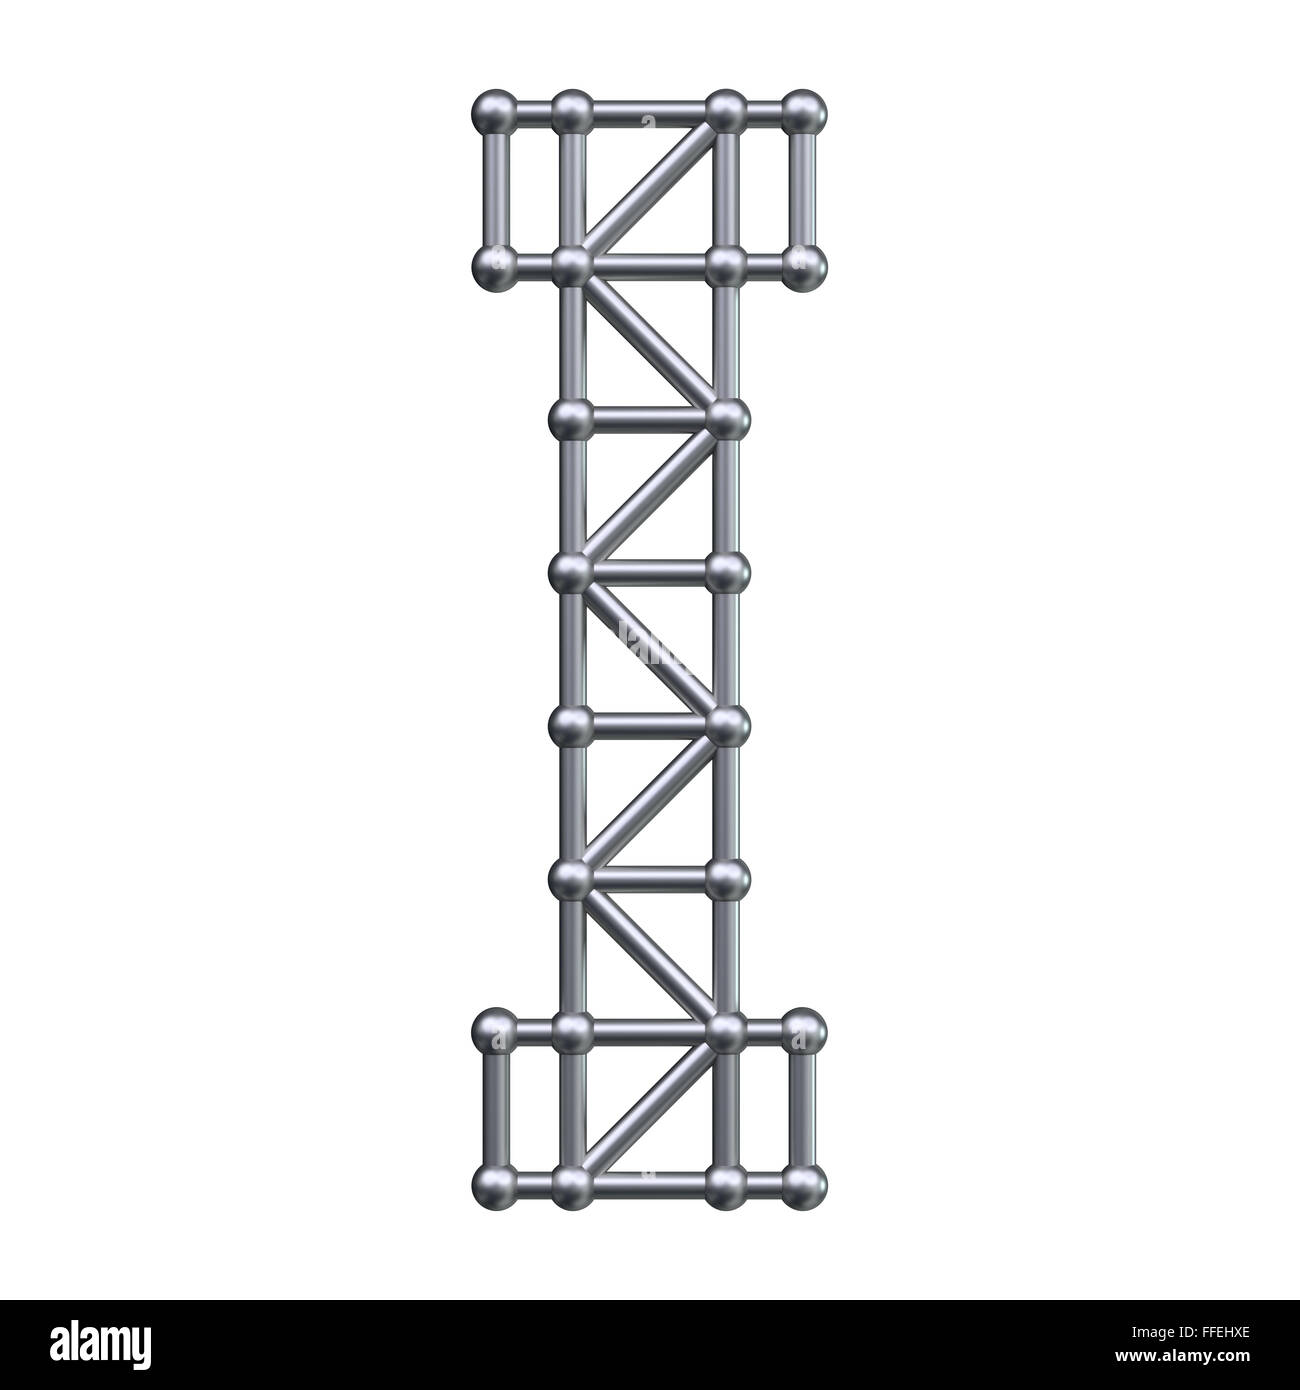 Metallstruktur Alphabet Buchstaben I. 3D Render. Stockfoto